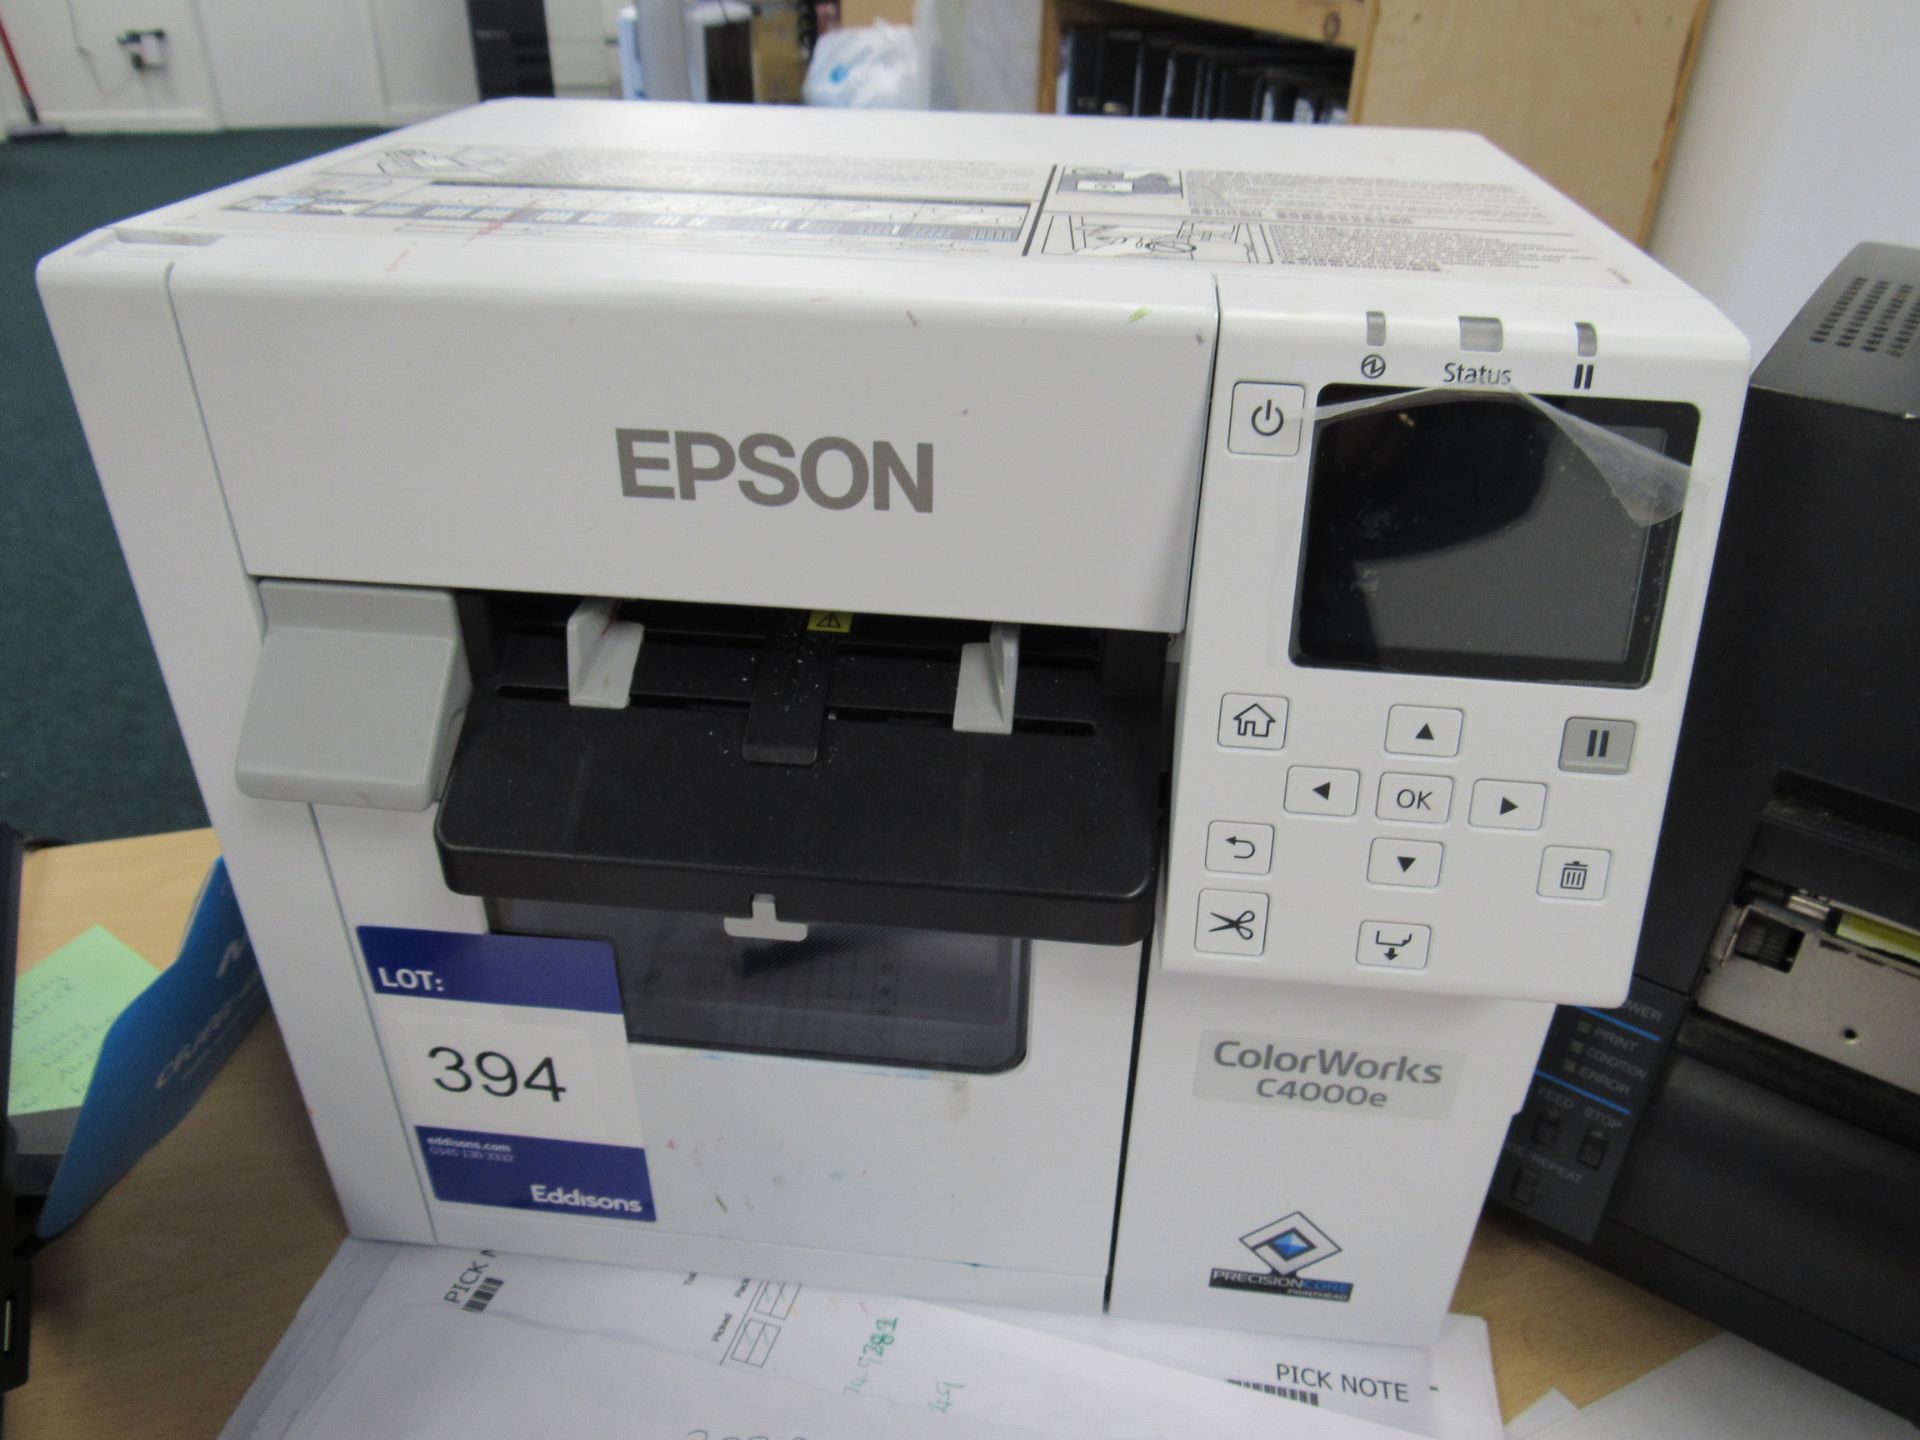 Epson Colorworks C4000e colour label printer - Image 2 of 2